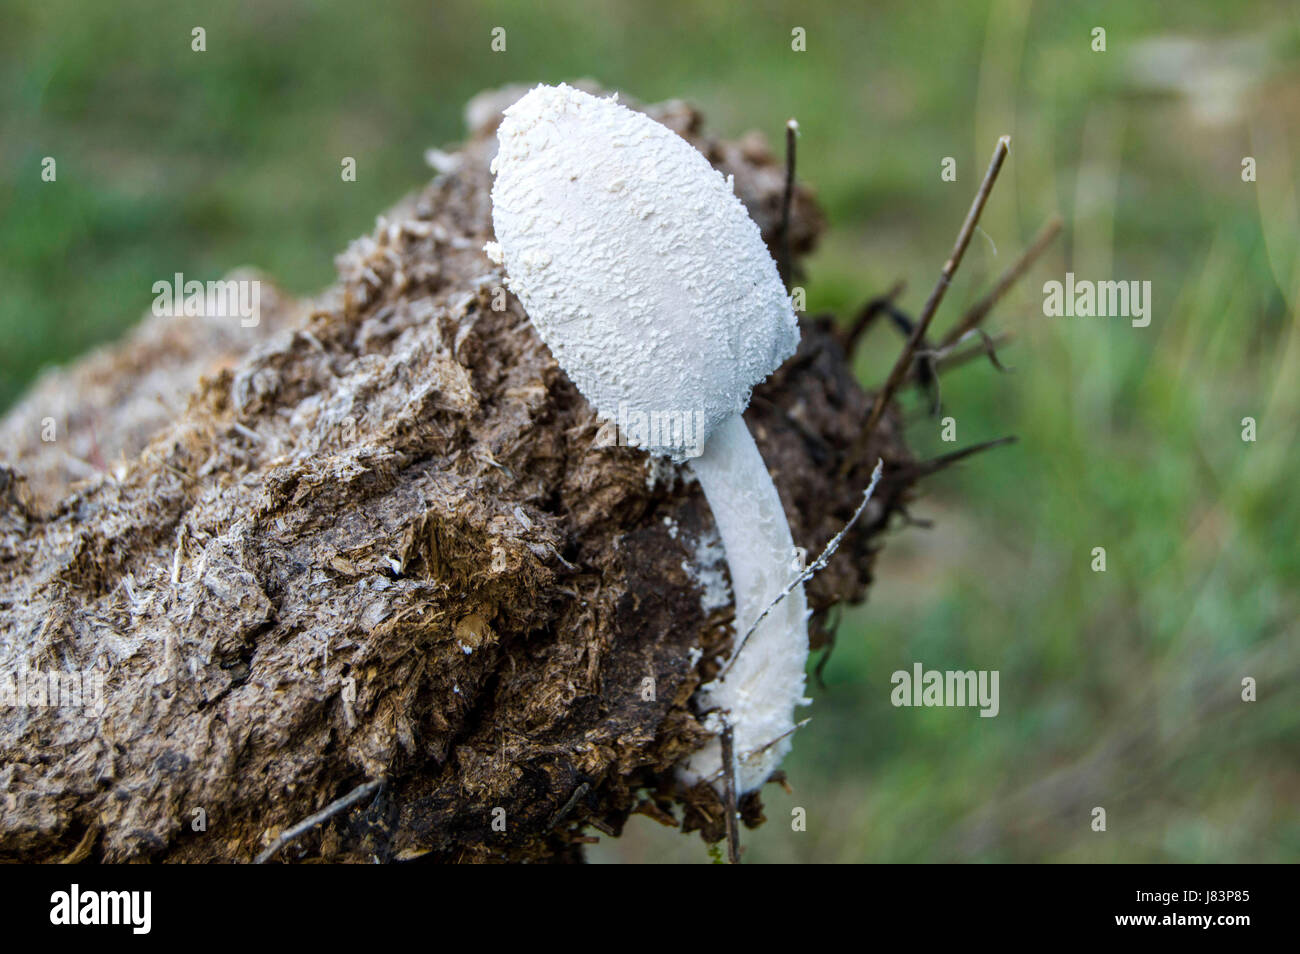 Fungi growing in natural environment, organic natural mushroom formed in animal feces Stock Photo